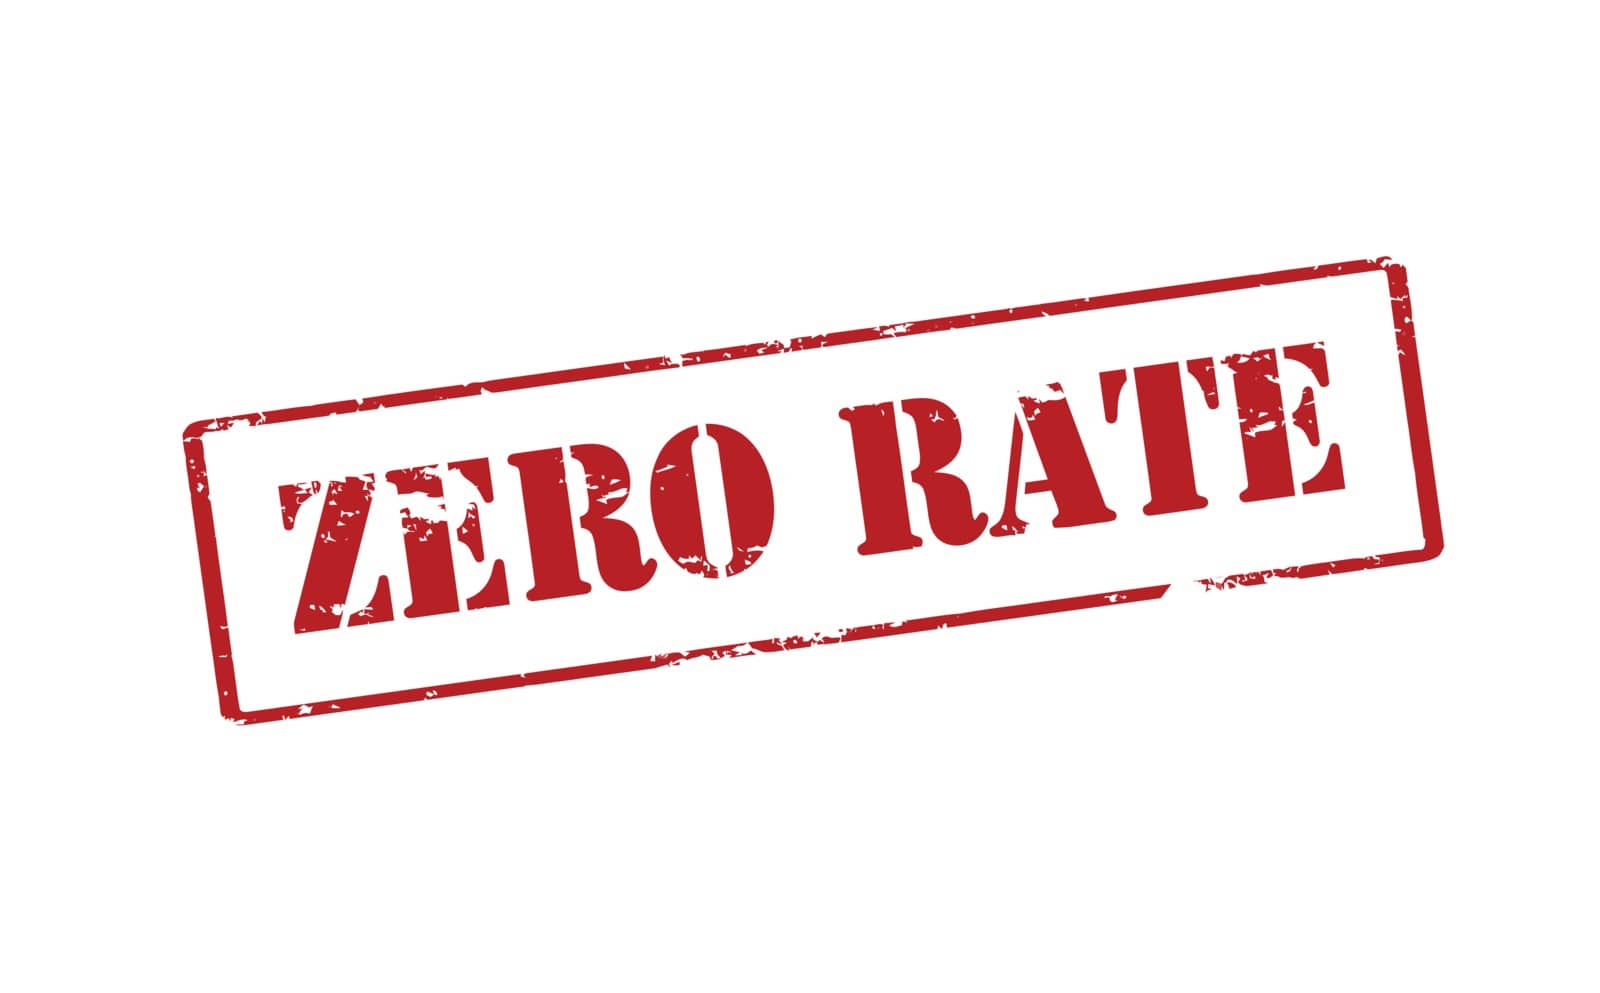 Zero rate by carmenbobo